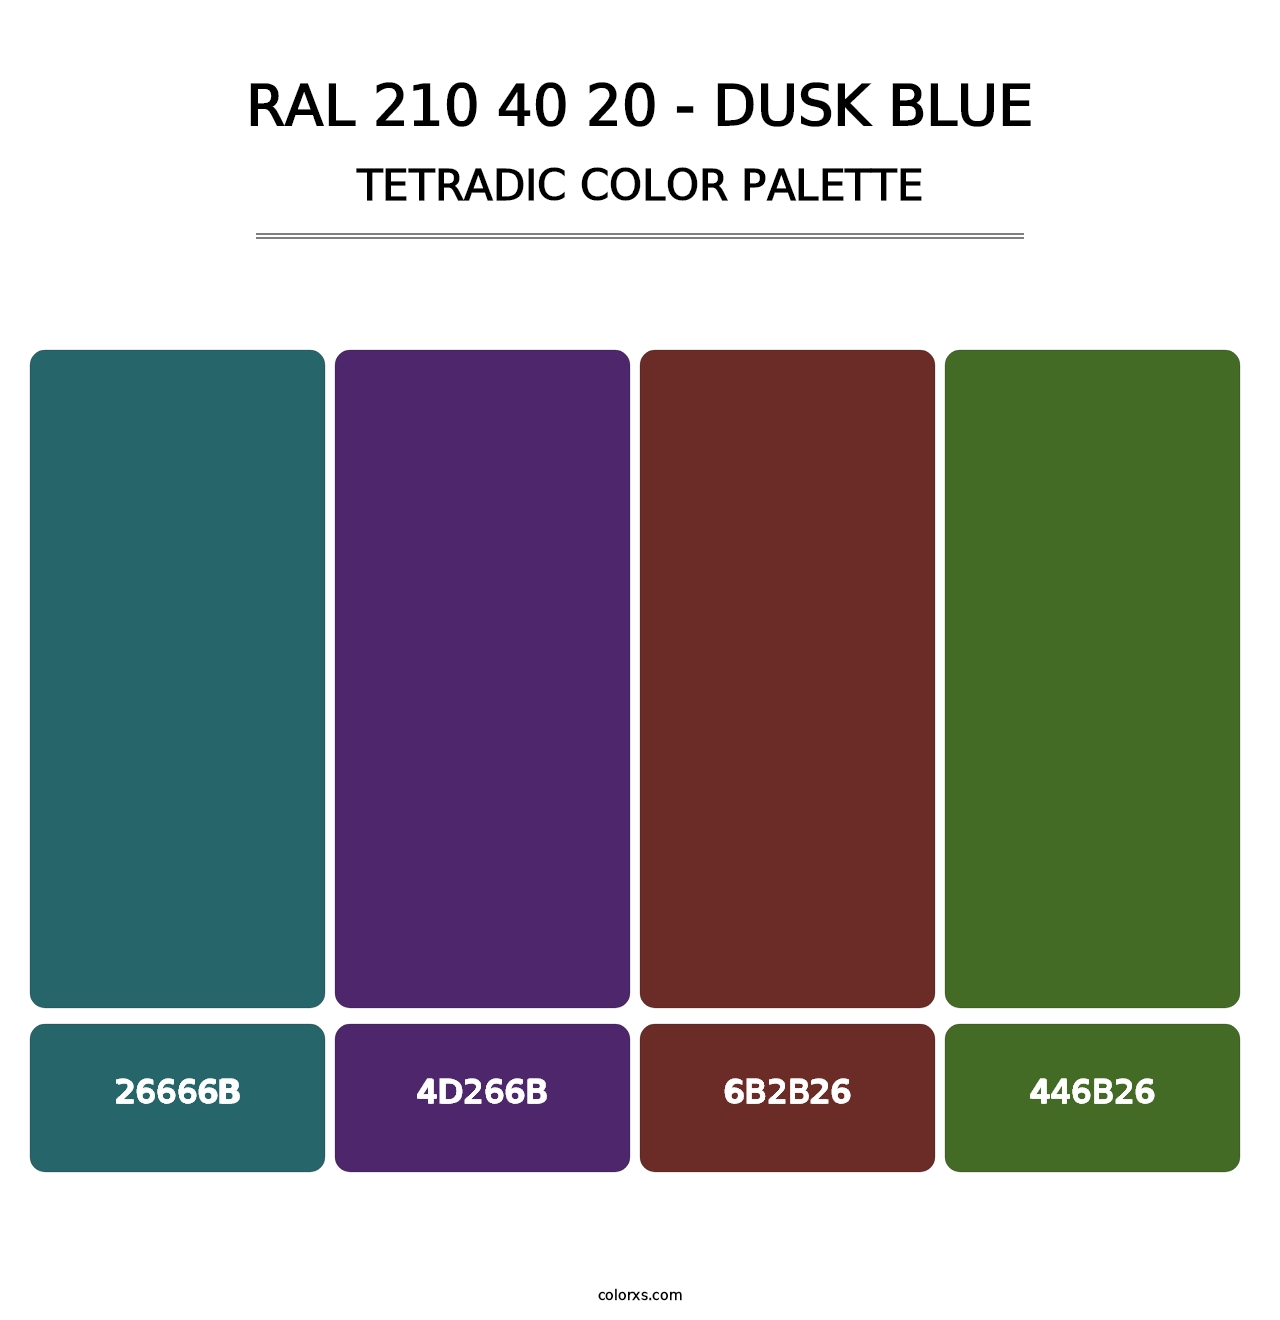 RAL 210 40 20 - Dusk Blue - Tetradic Color Palette